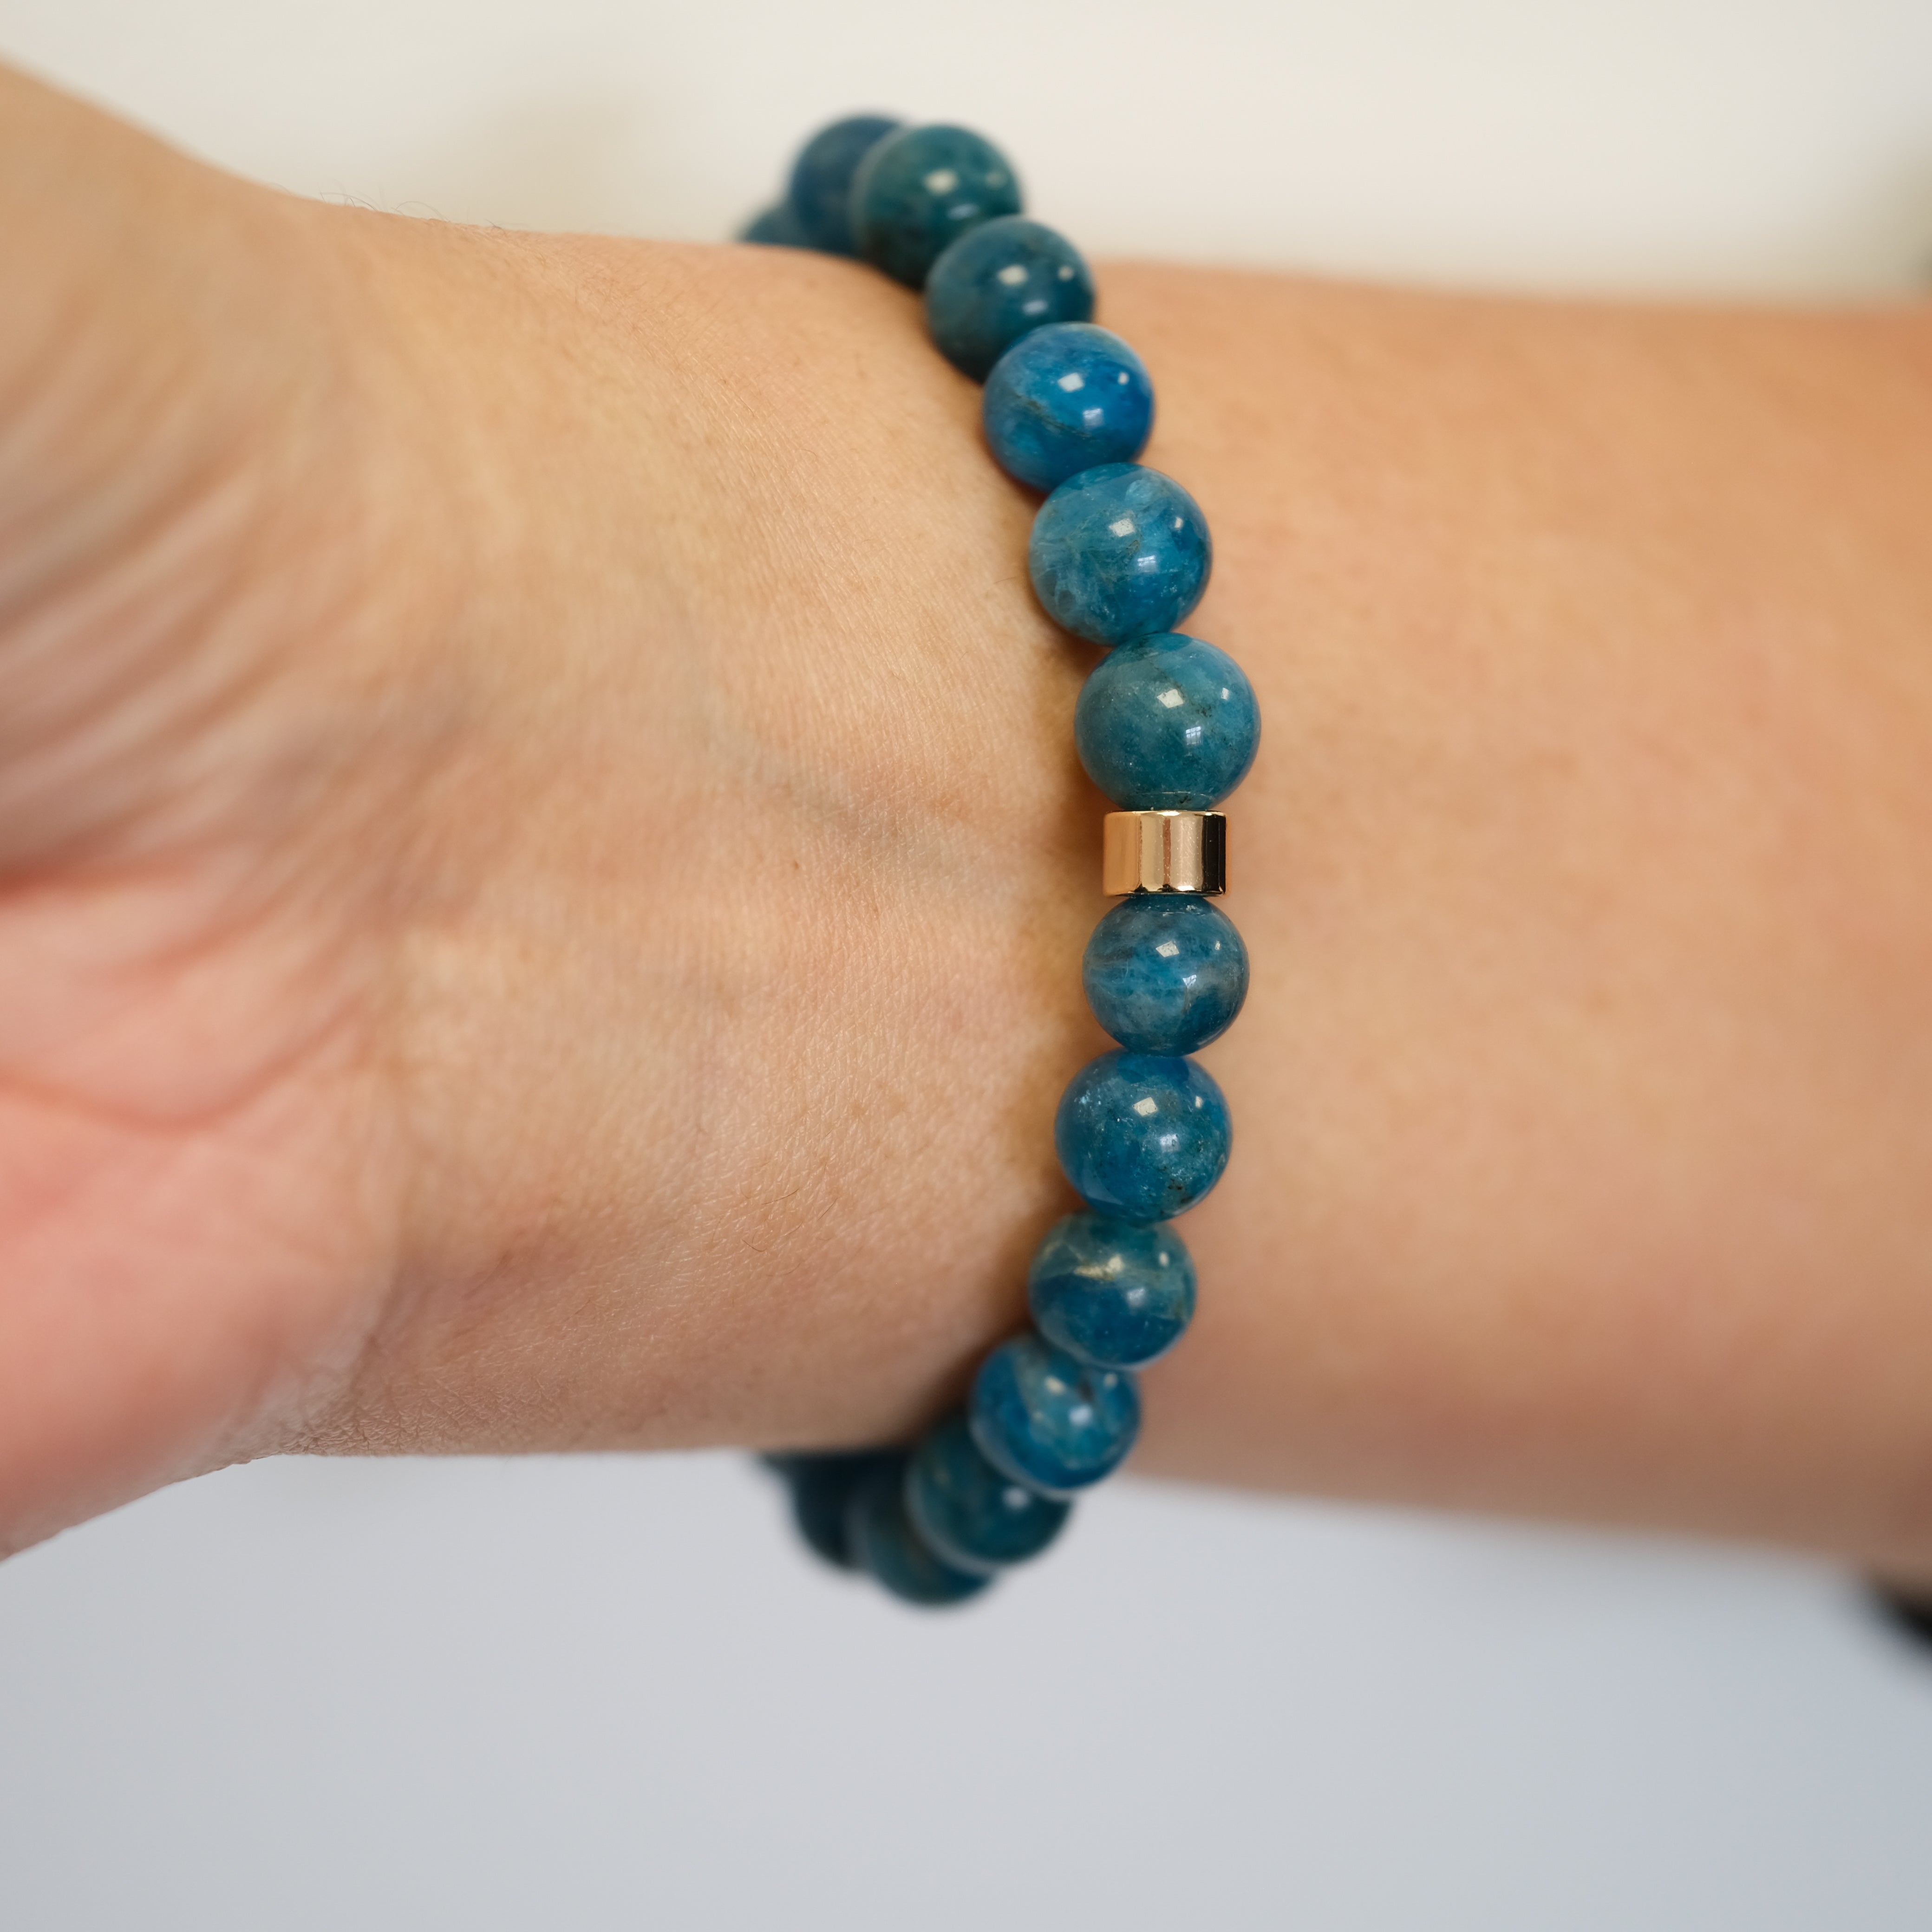 Apatite gemstone bracelet worn on a model's wrist